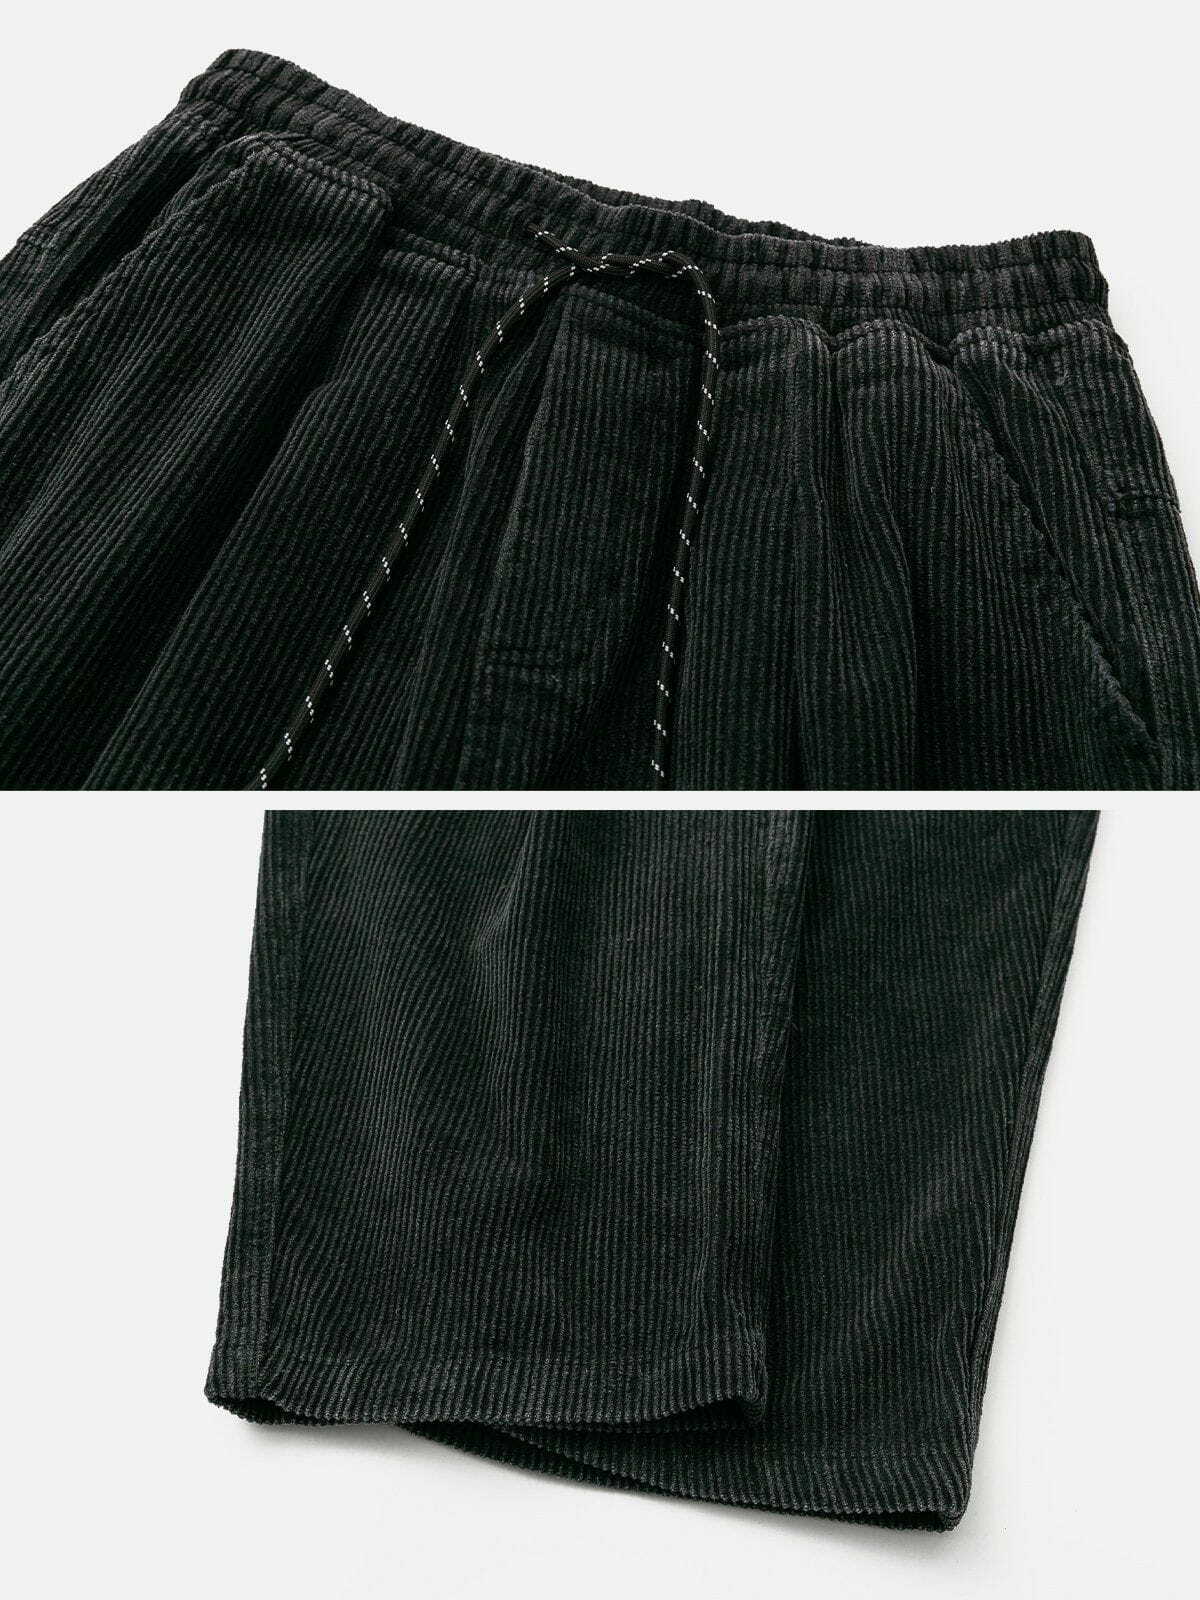 washed corduroy pants retro streetwear essential 1147